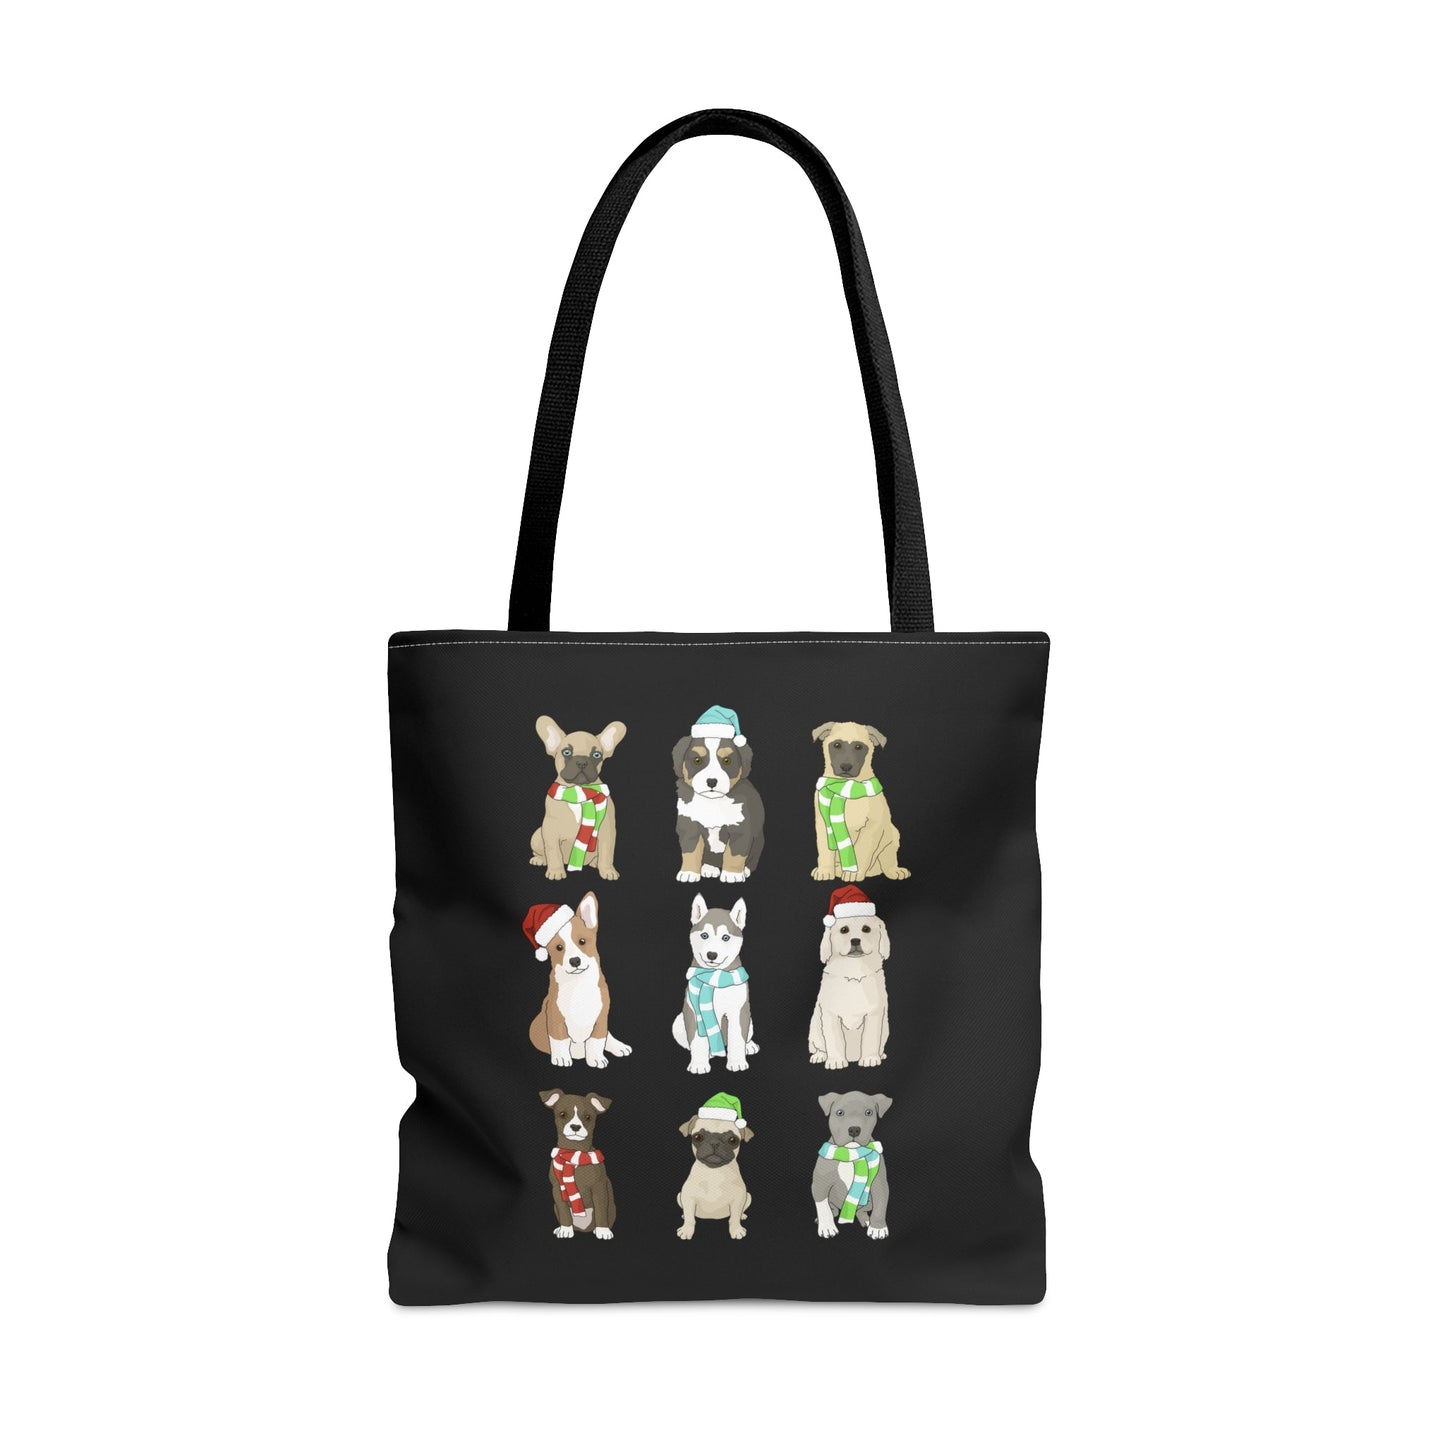 Holiday Puppies | Tote Bag - Detezi Designs-12816131681958292233